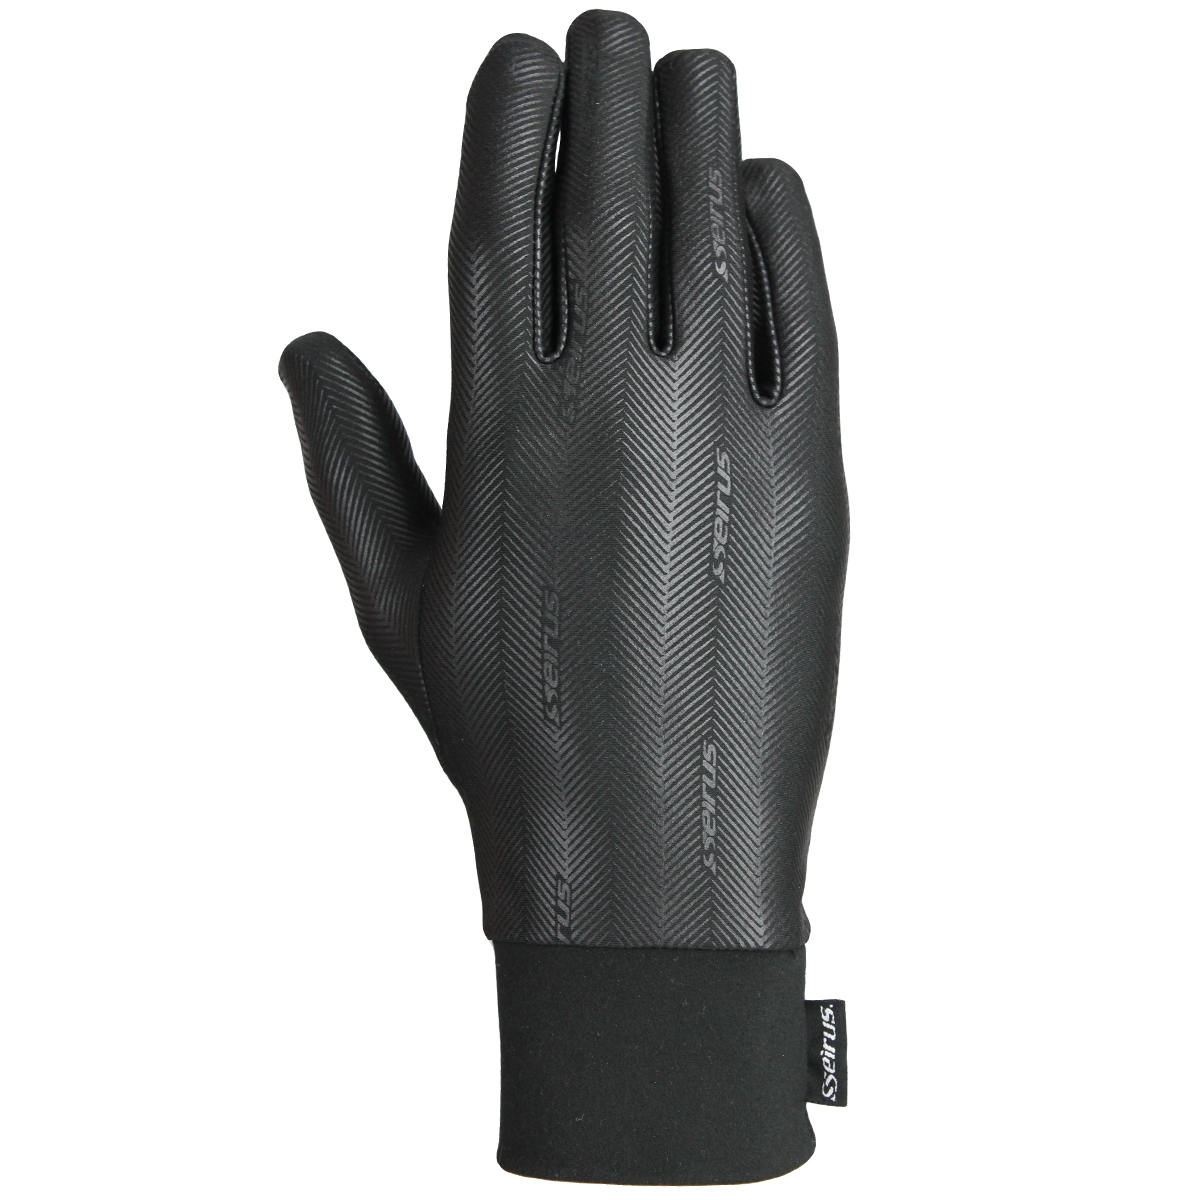 Seirus Men's Soundtouch Heatwave Glove Liners